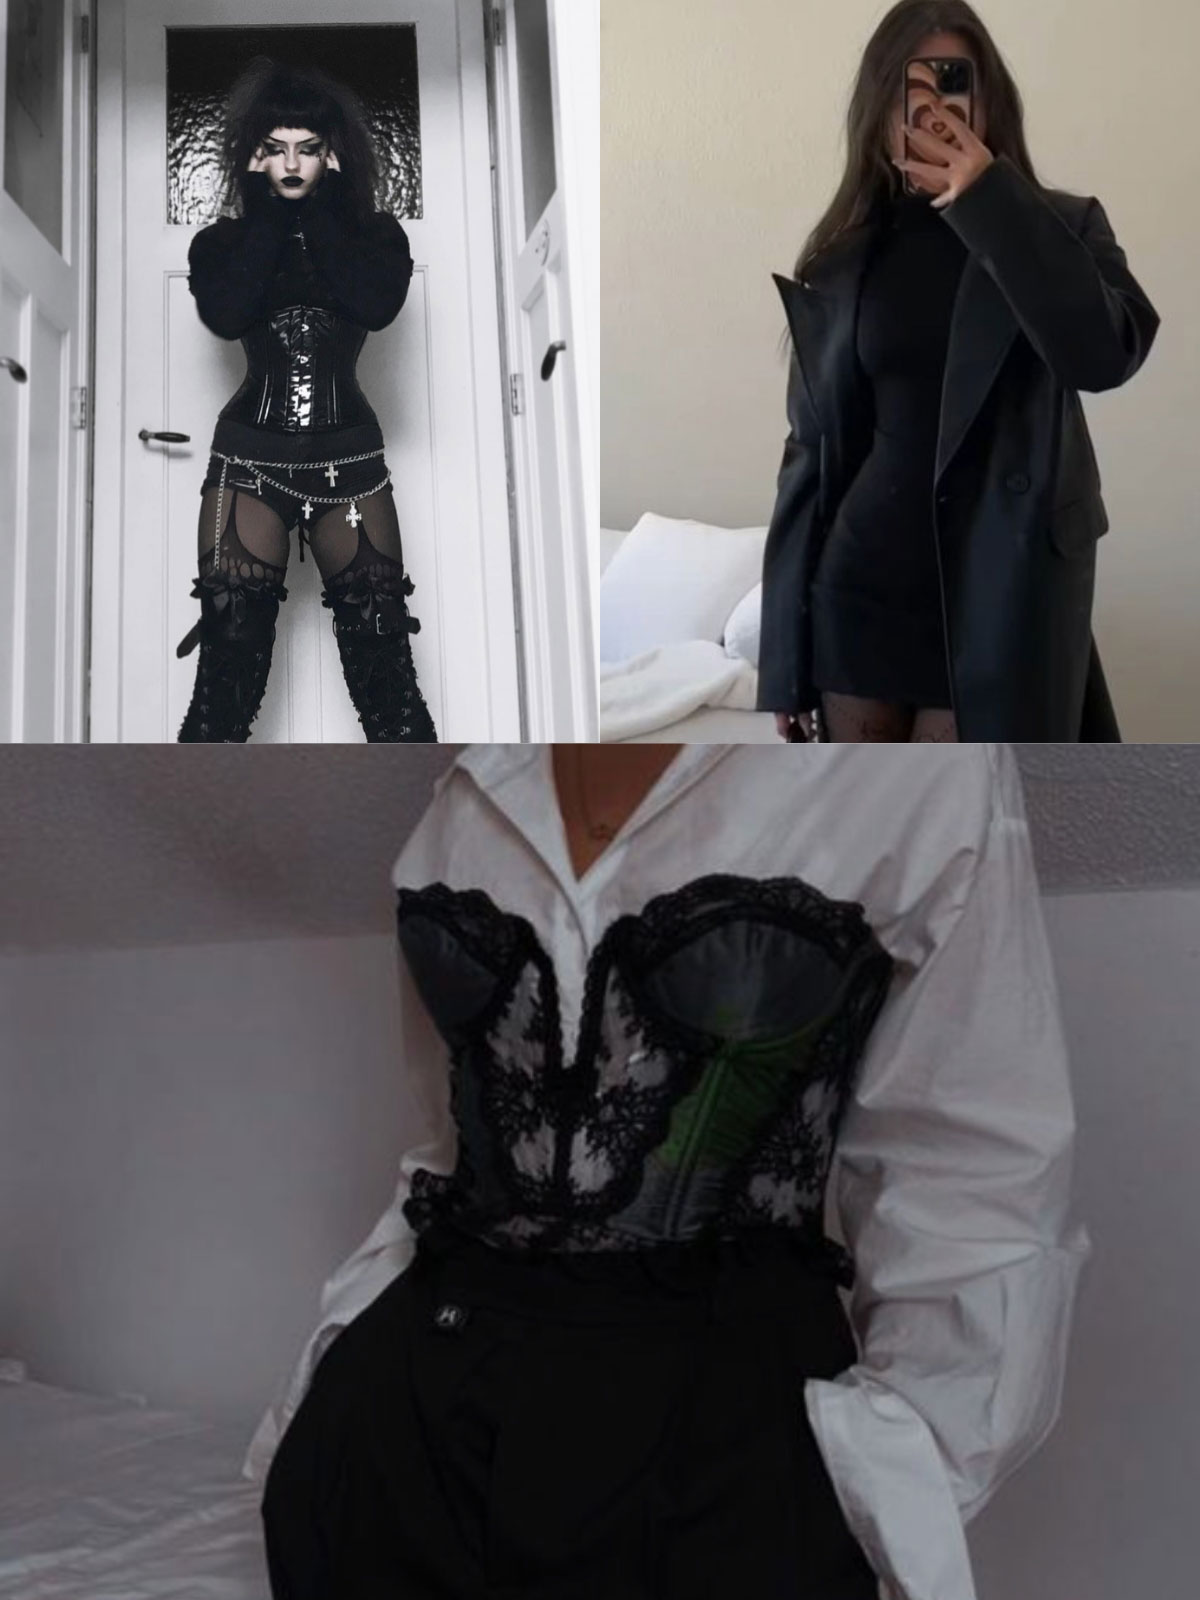 3 examples of villain era clothing inspiration